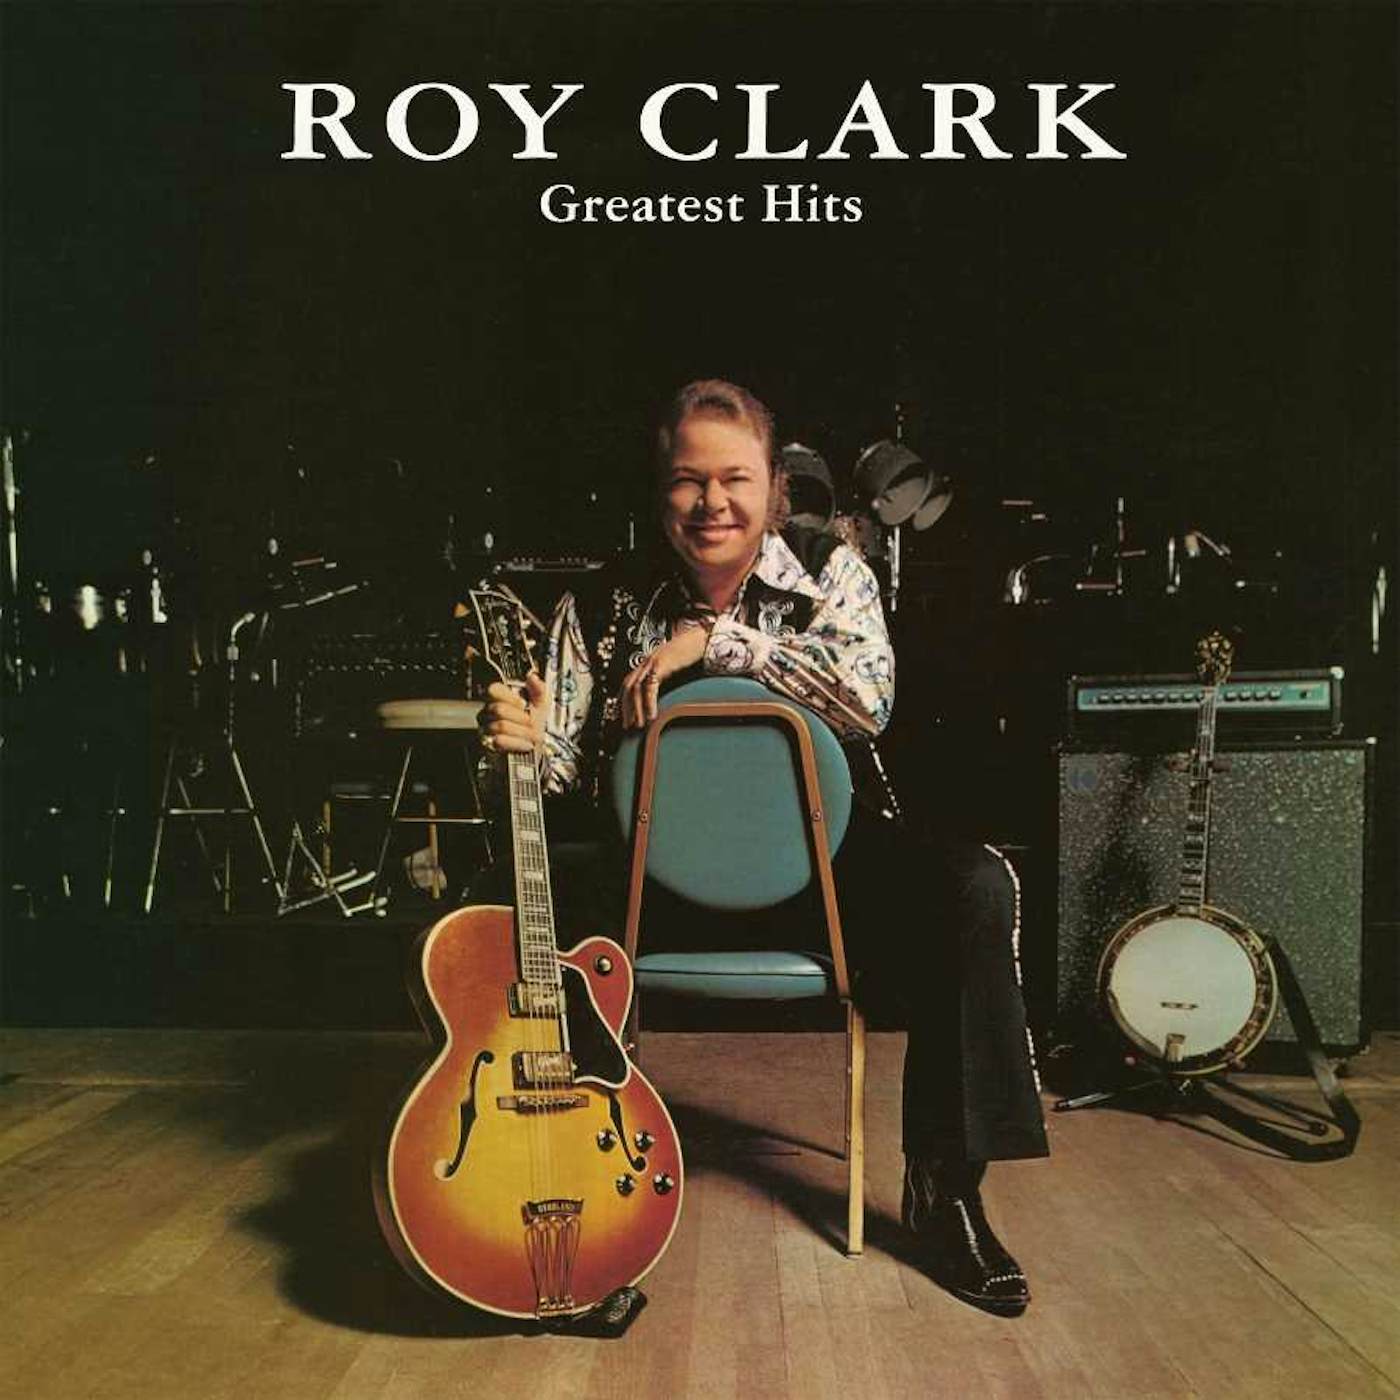 Roy Clark GREATEST HITS CD